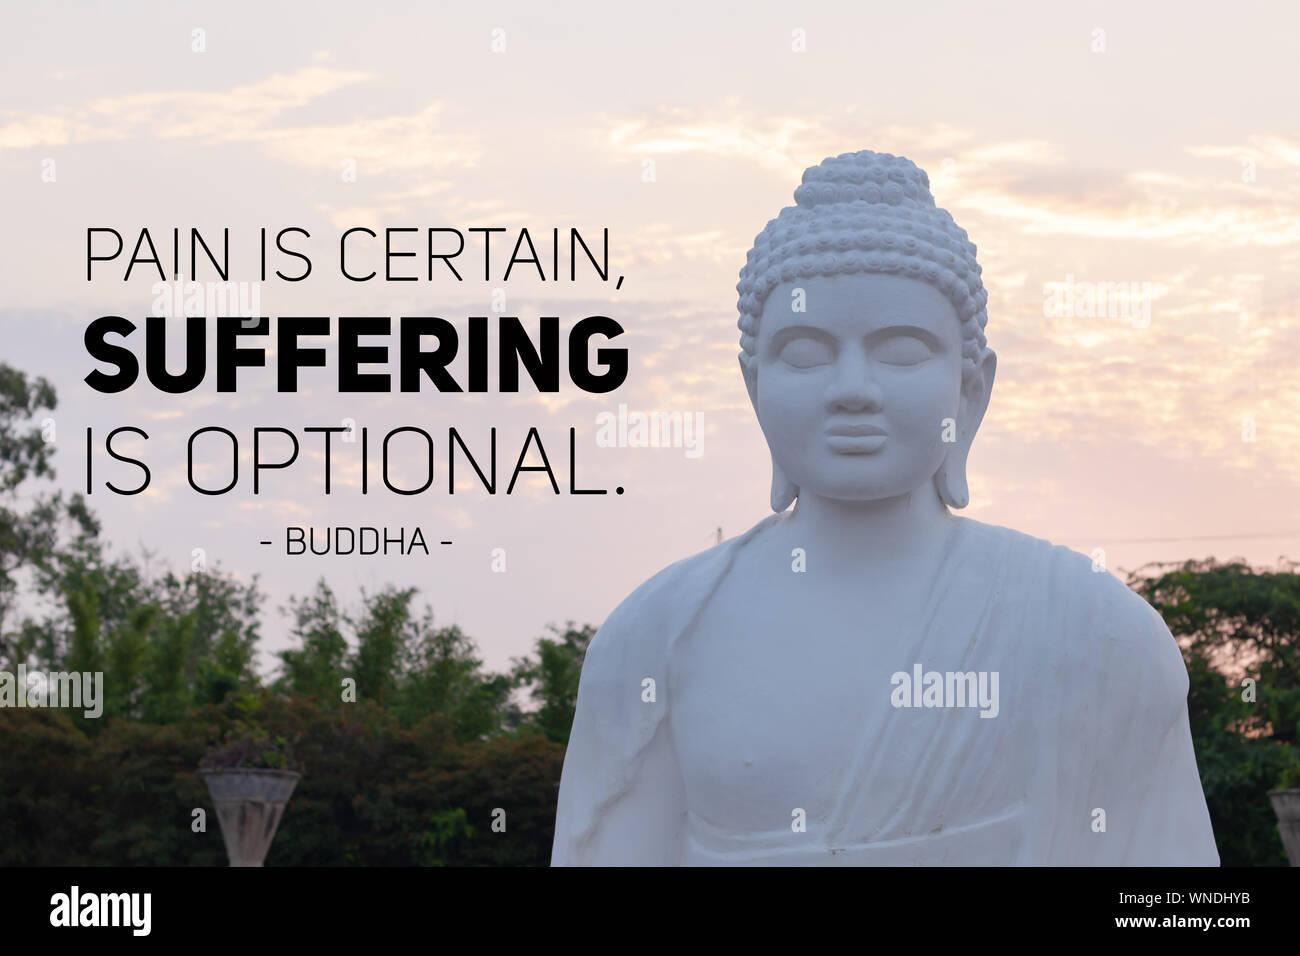 Pain Is Certain Suffering Is Optional - Buddha Stock Photo - Alamy